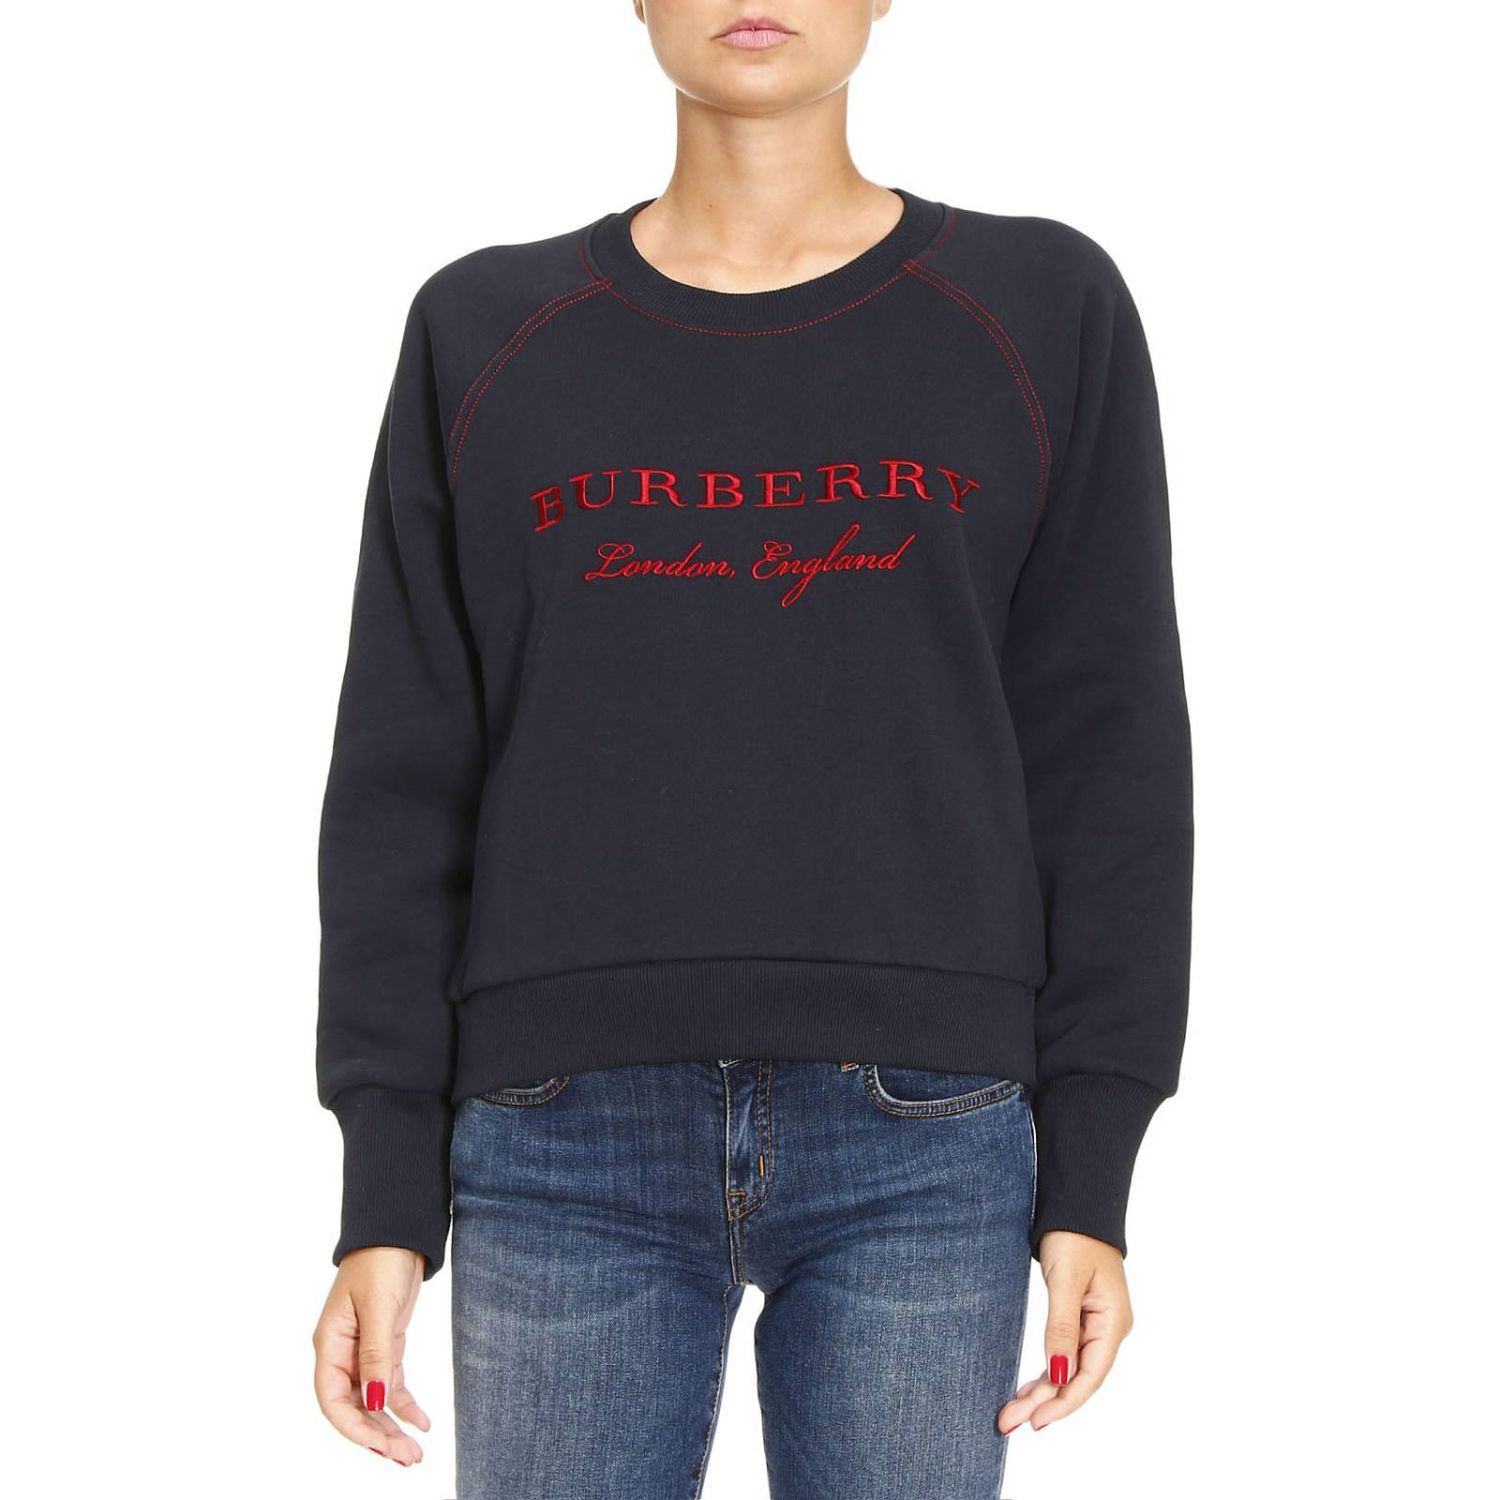 Sweater women Burberry | Sweatshirt Burberry Women Navy | Sweatshirt ...